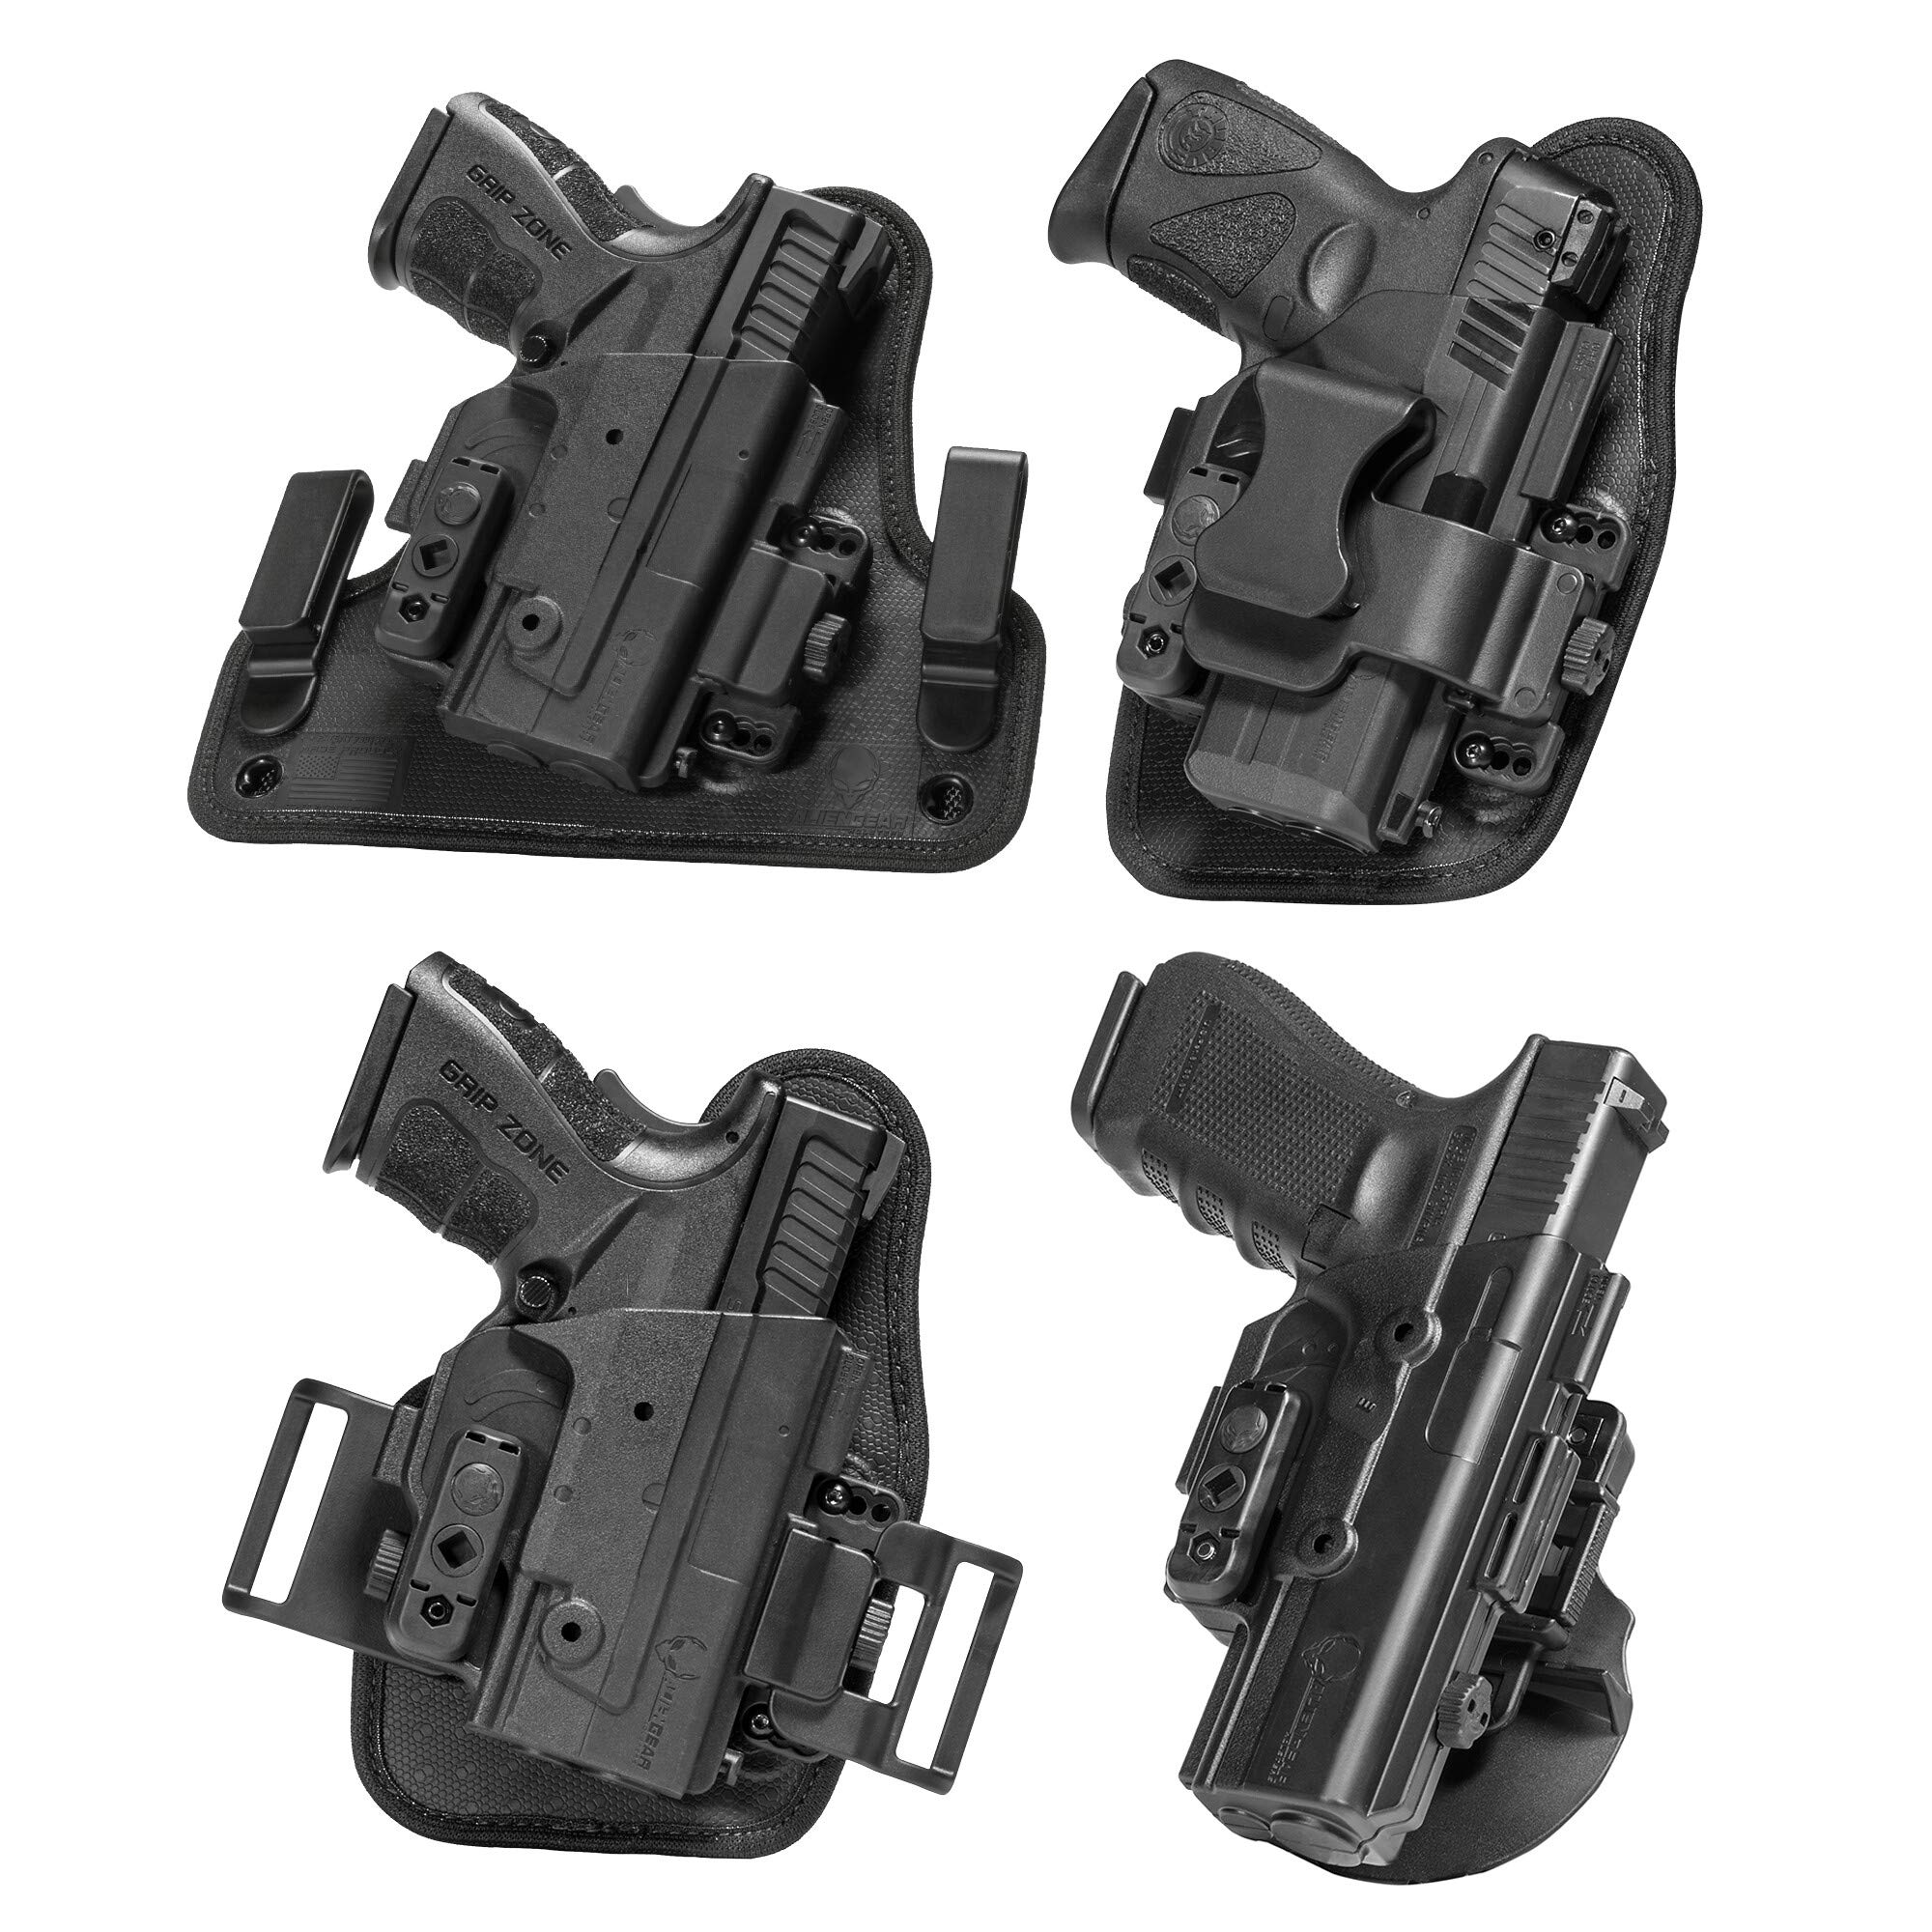 Alien gear Holsters core carry Kit for a glock 43X - Right Hand - 15 Belt Slide - Standard clips